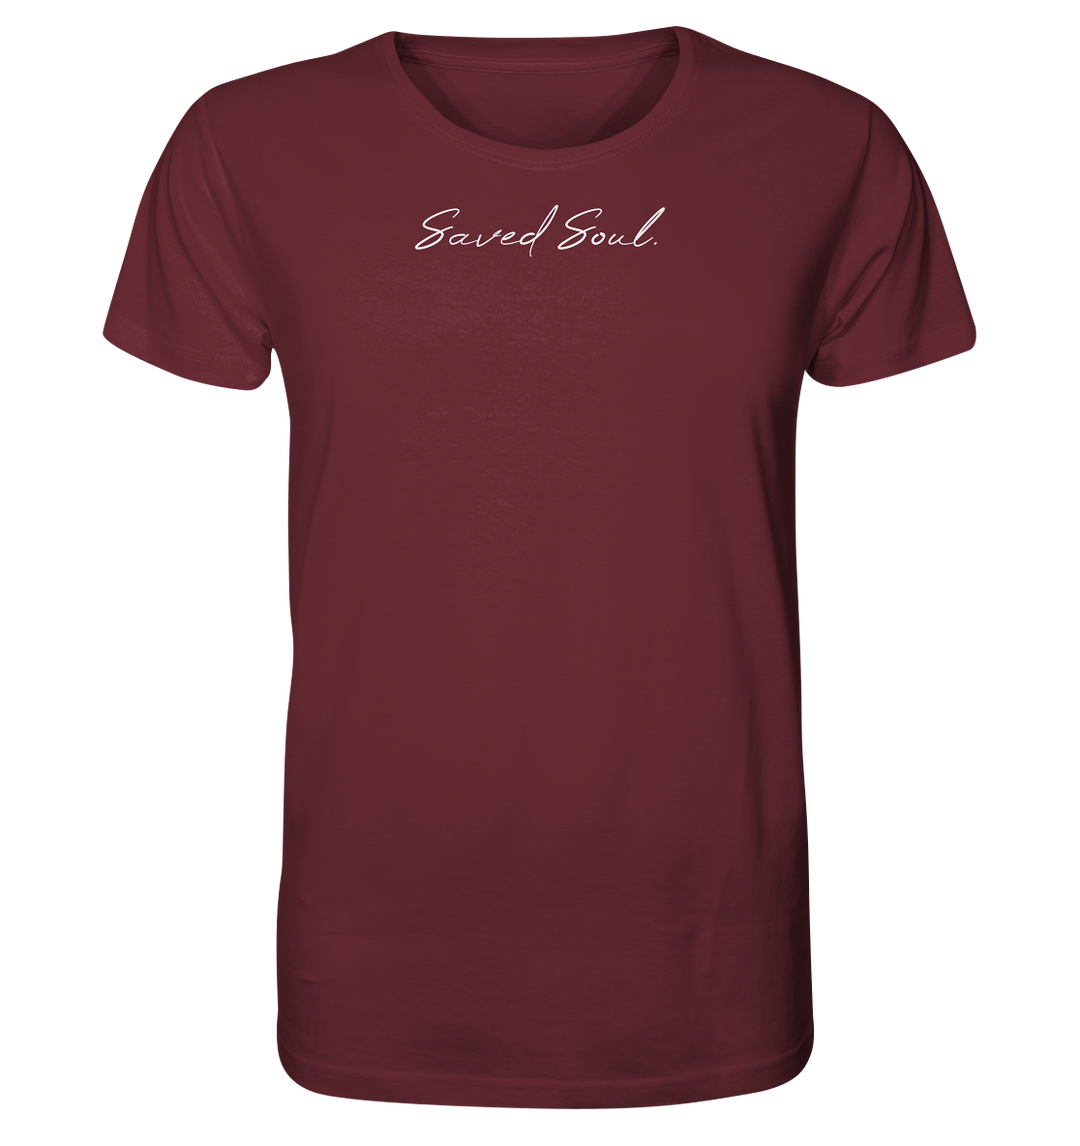 Saved Soul - Bio-Shirt, Männer